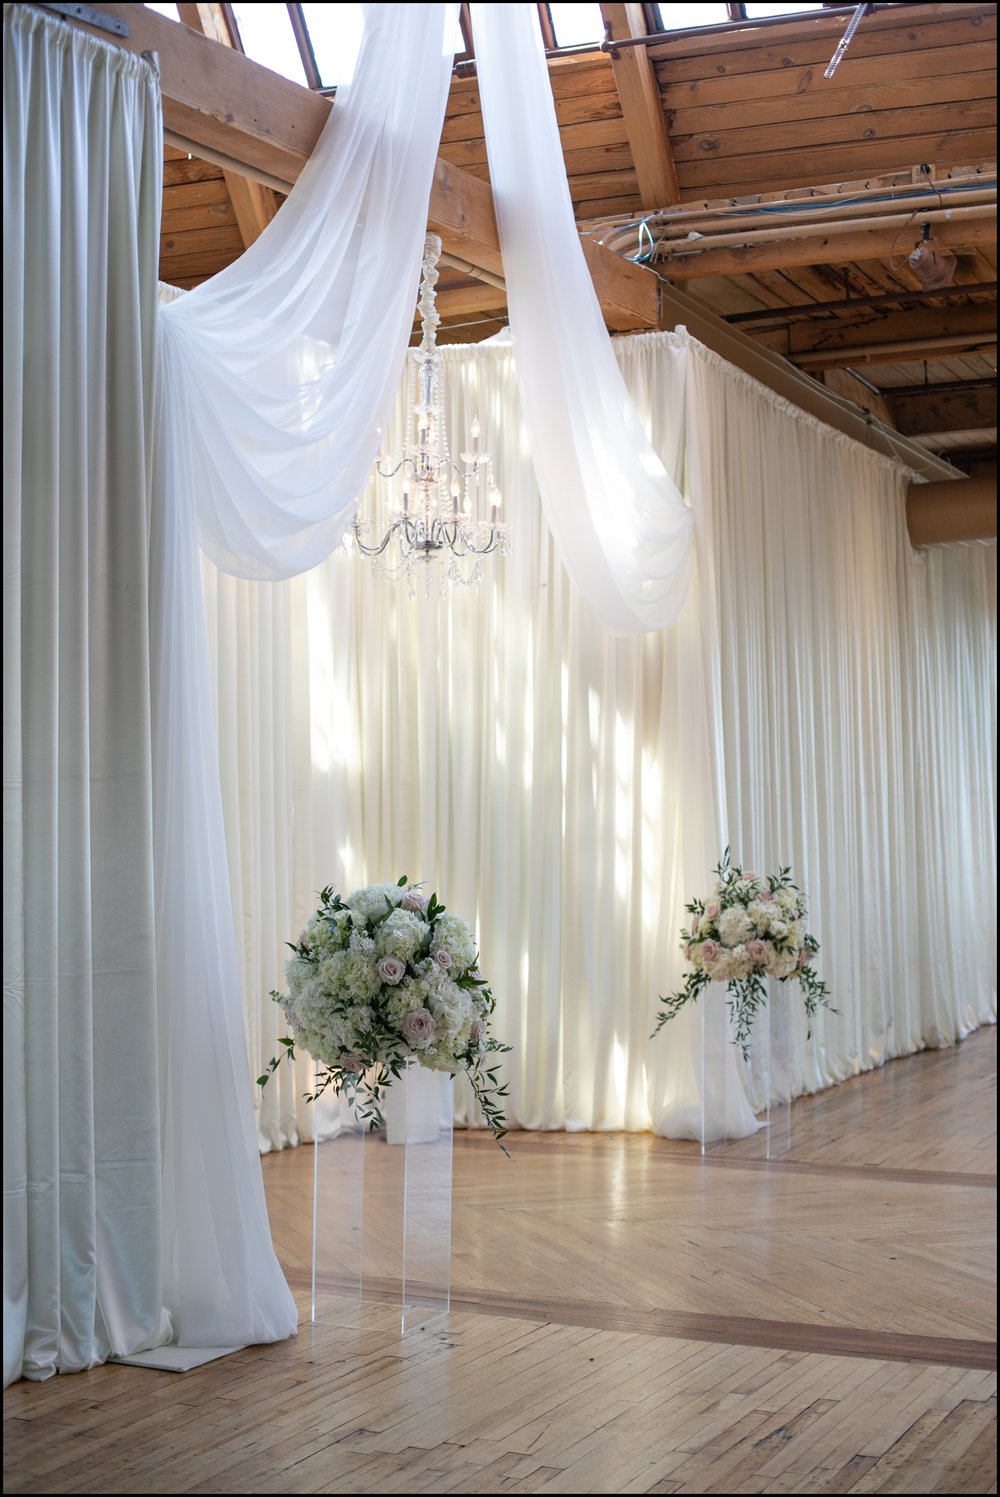  All white wedding arch 